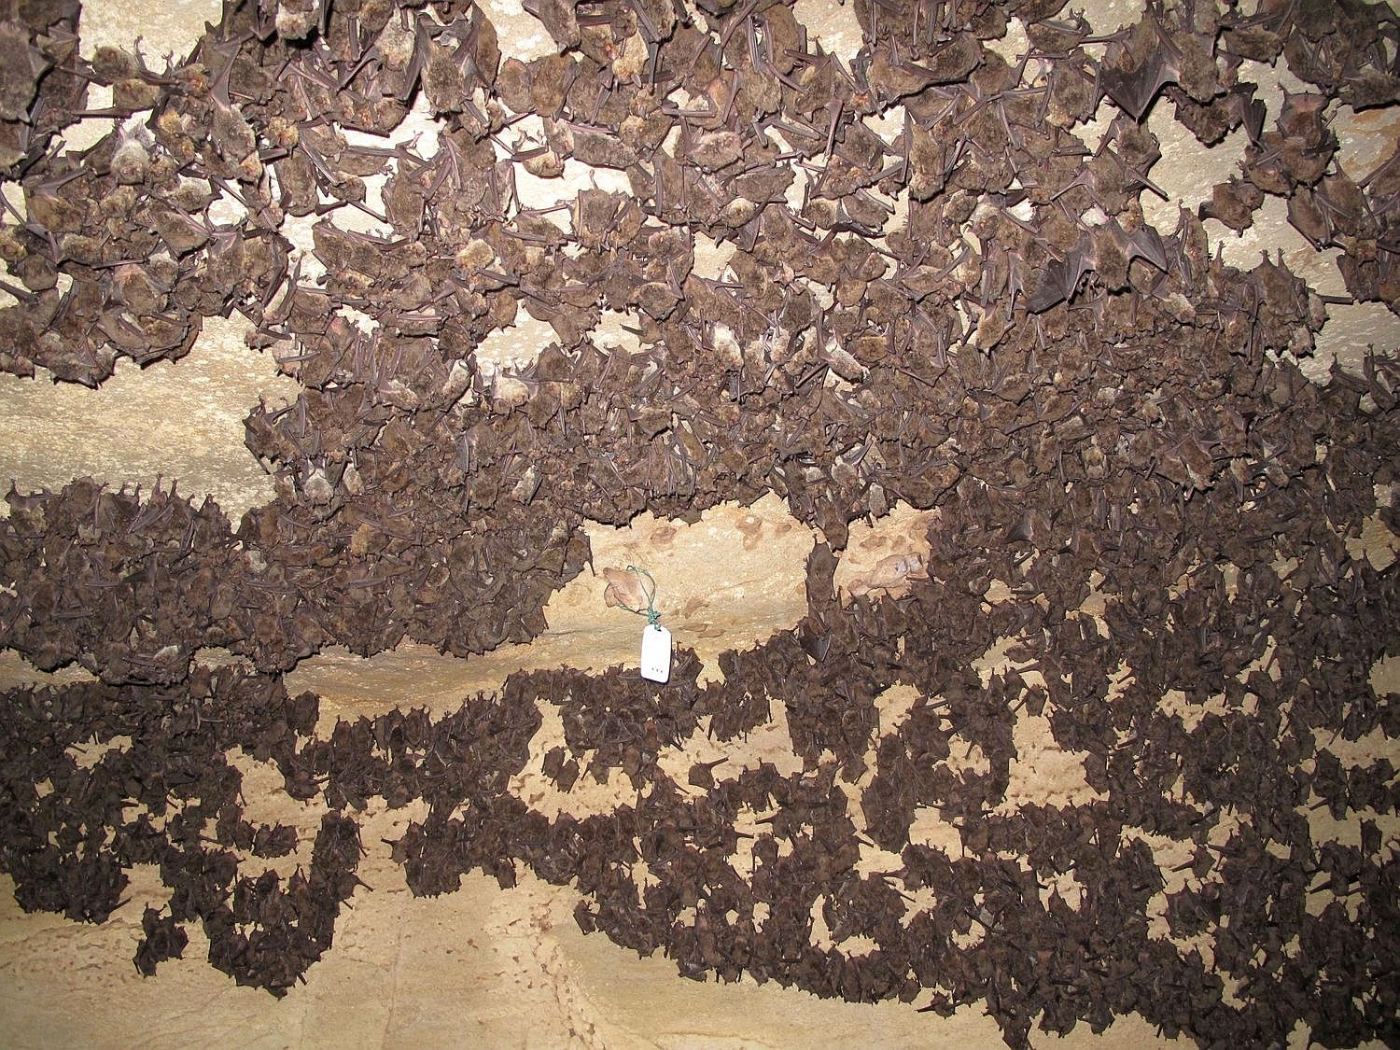 More than 1 million gray bats hibernate each winter at Fern Cave National Wildlife Refuge in Alabama. Image credit Jennifer Pinkley, USFWS, Public Domain